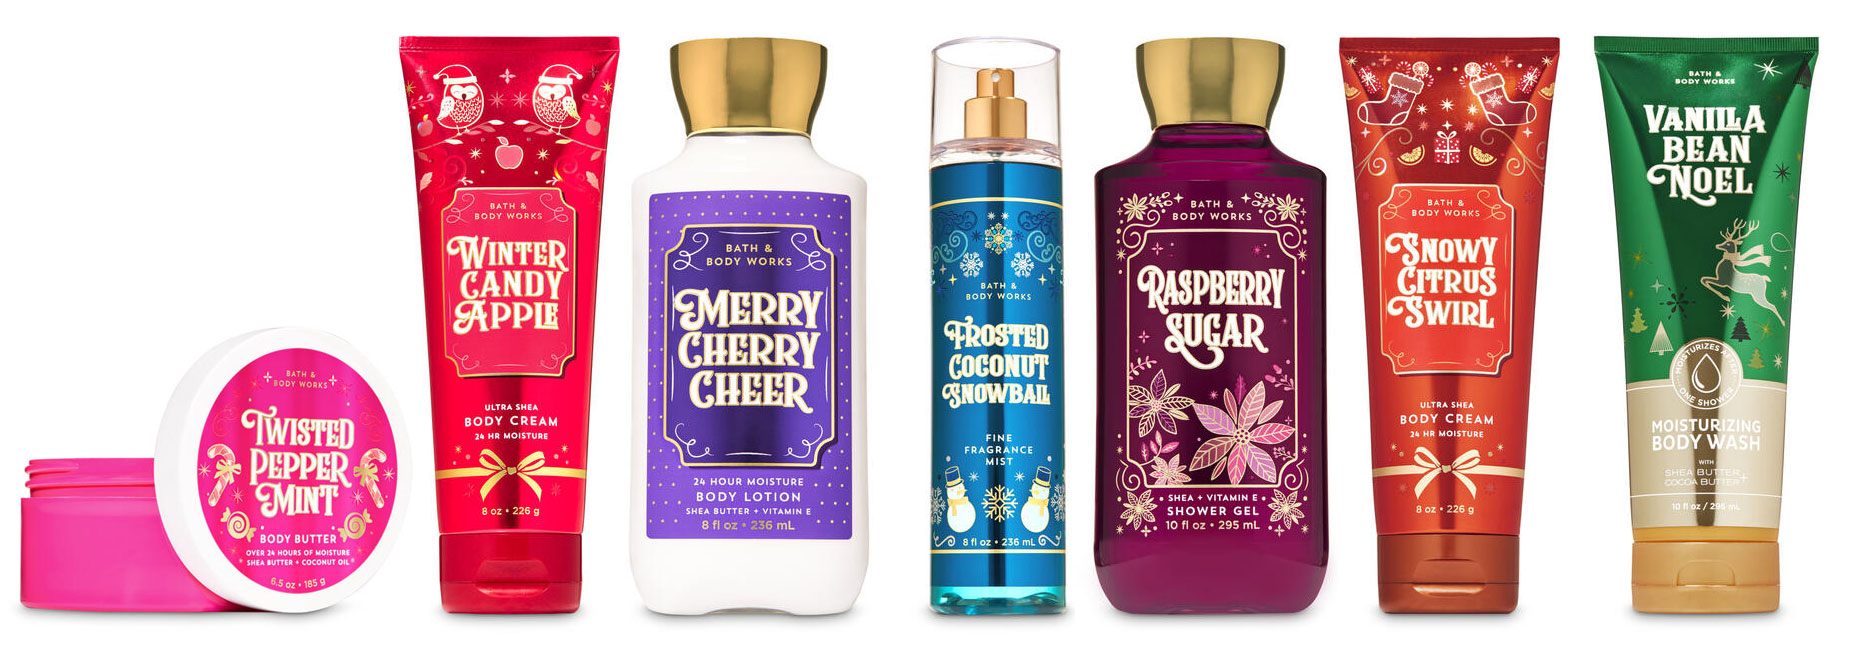 Bath & Body Works Christmas Fragrances collection - The Perfume Girl